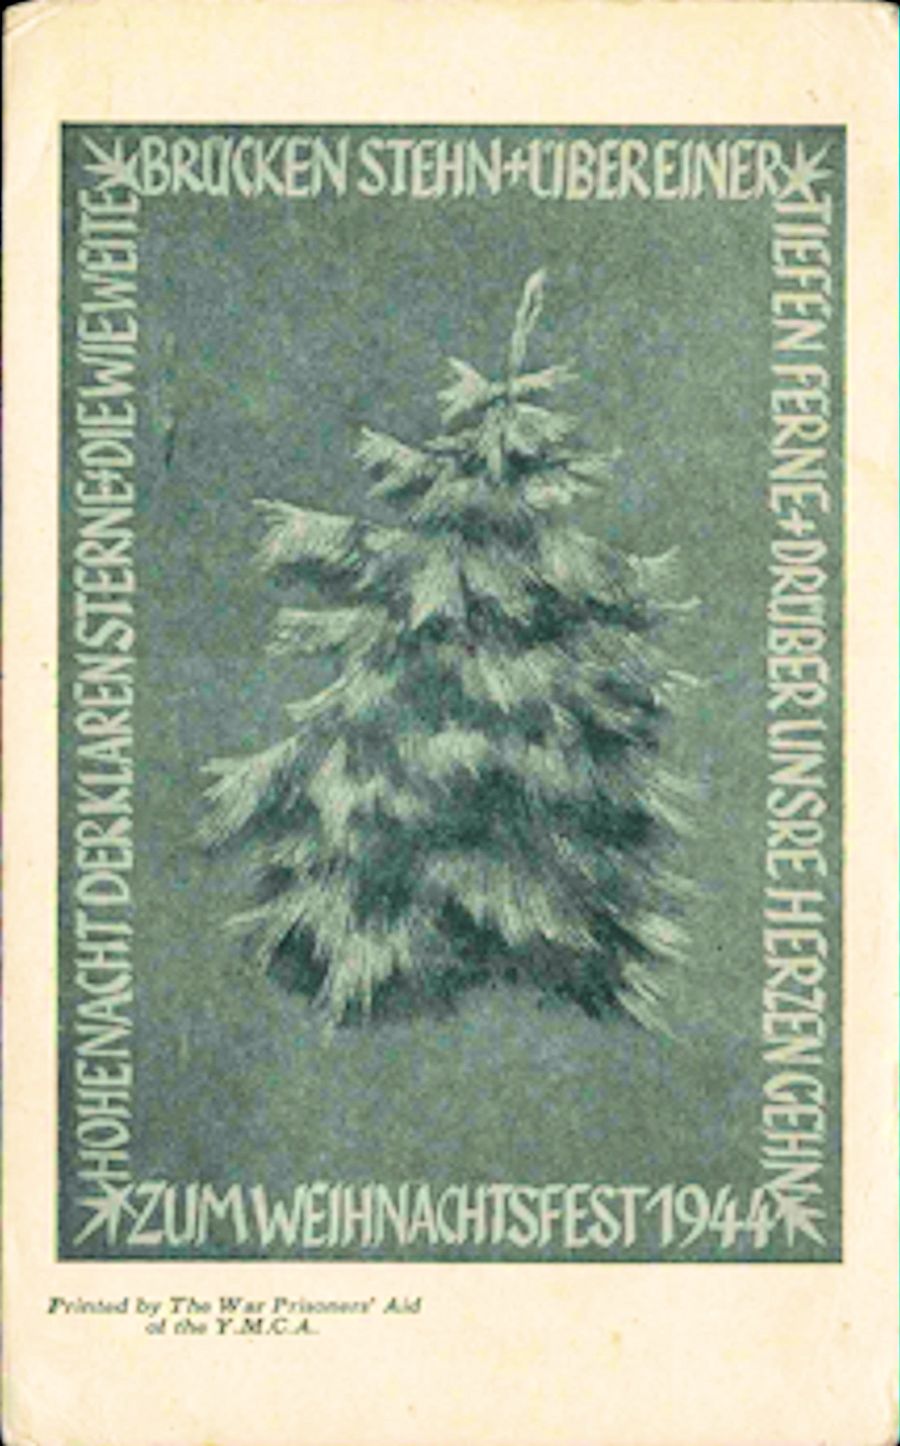 
1944;Canada;The War Prisoners Aid of the YMCA ; WW II-Era Christmas POW Card